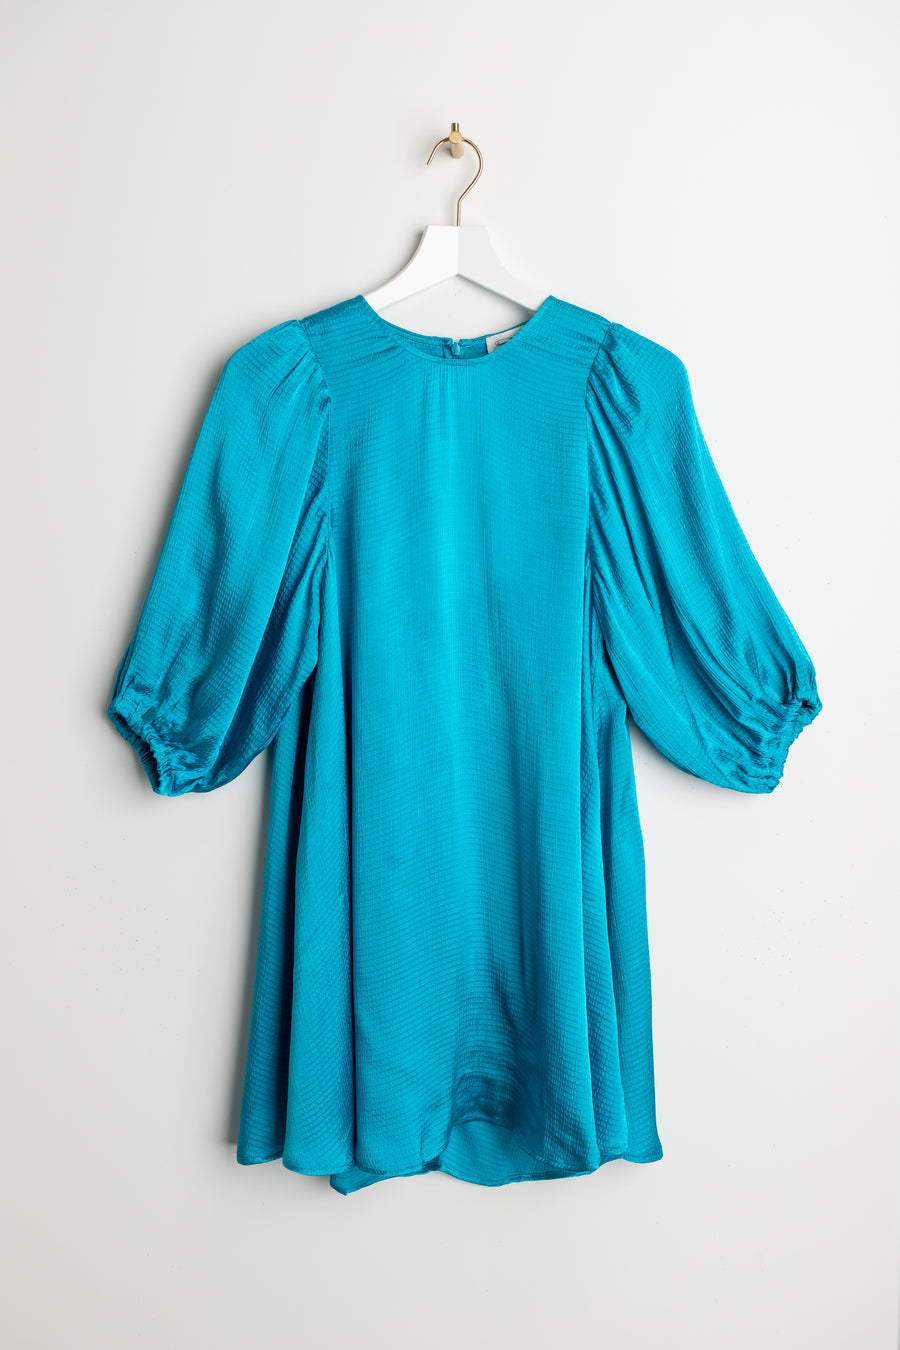 American Vintage Kleid aquatique